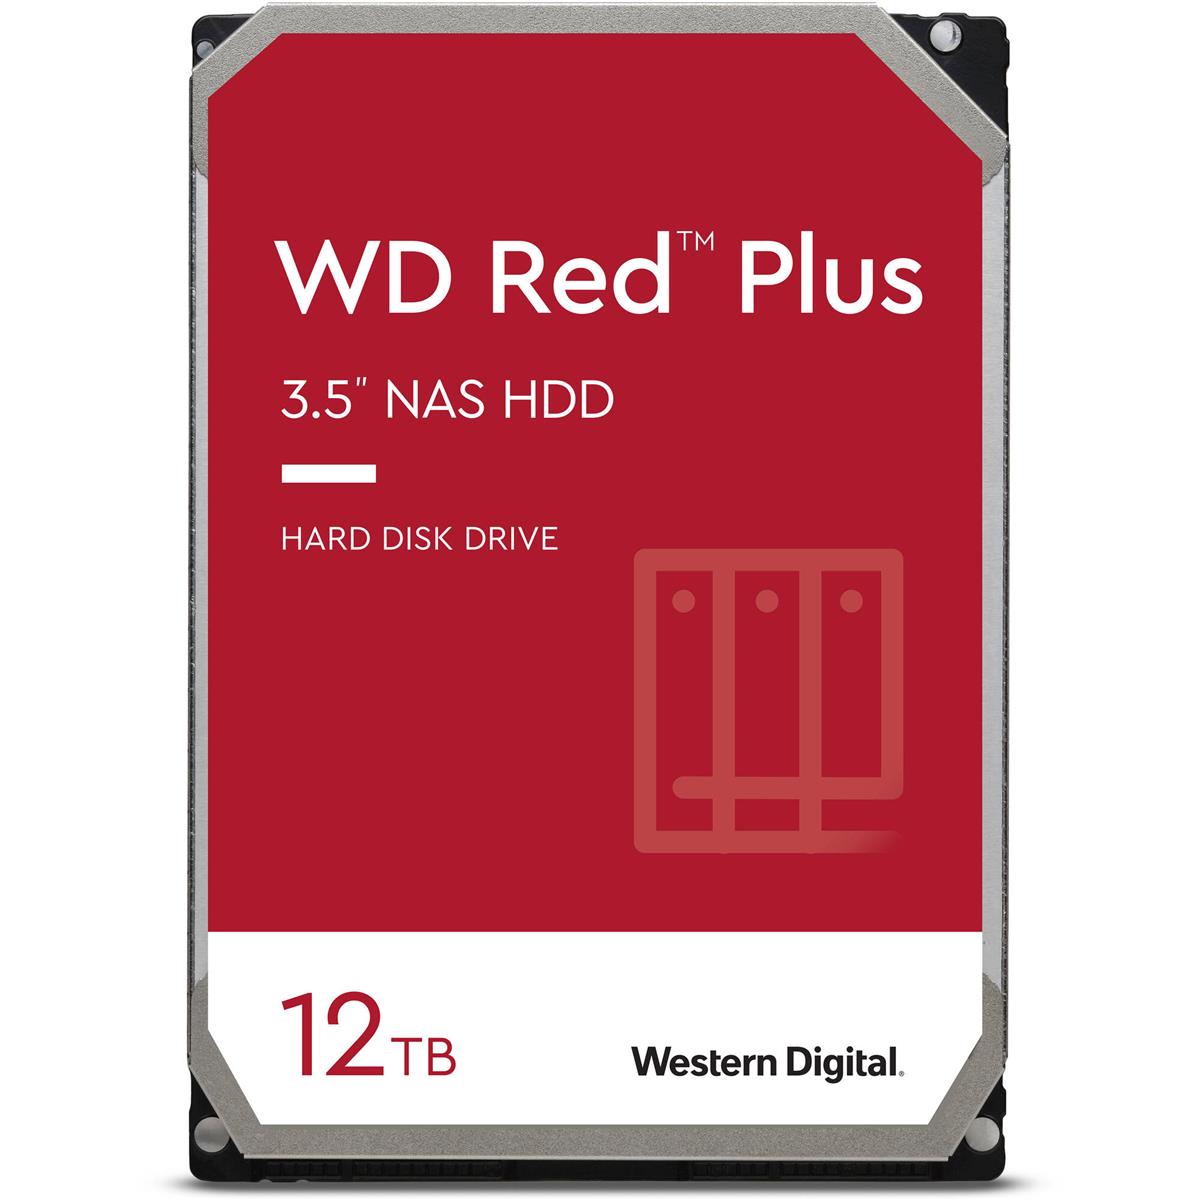 WD Red Plus NAS Hard Drive 6TB 5640rpm SATA - $89.99